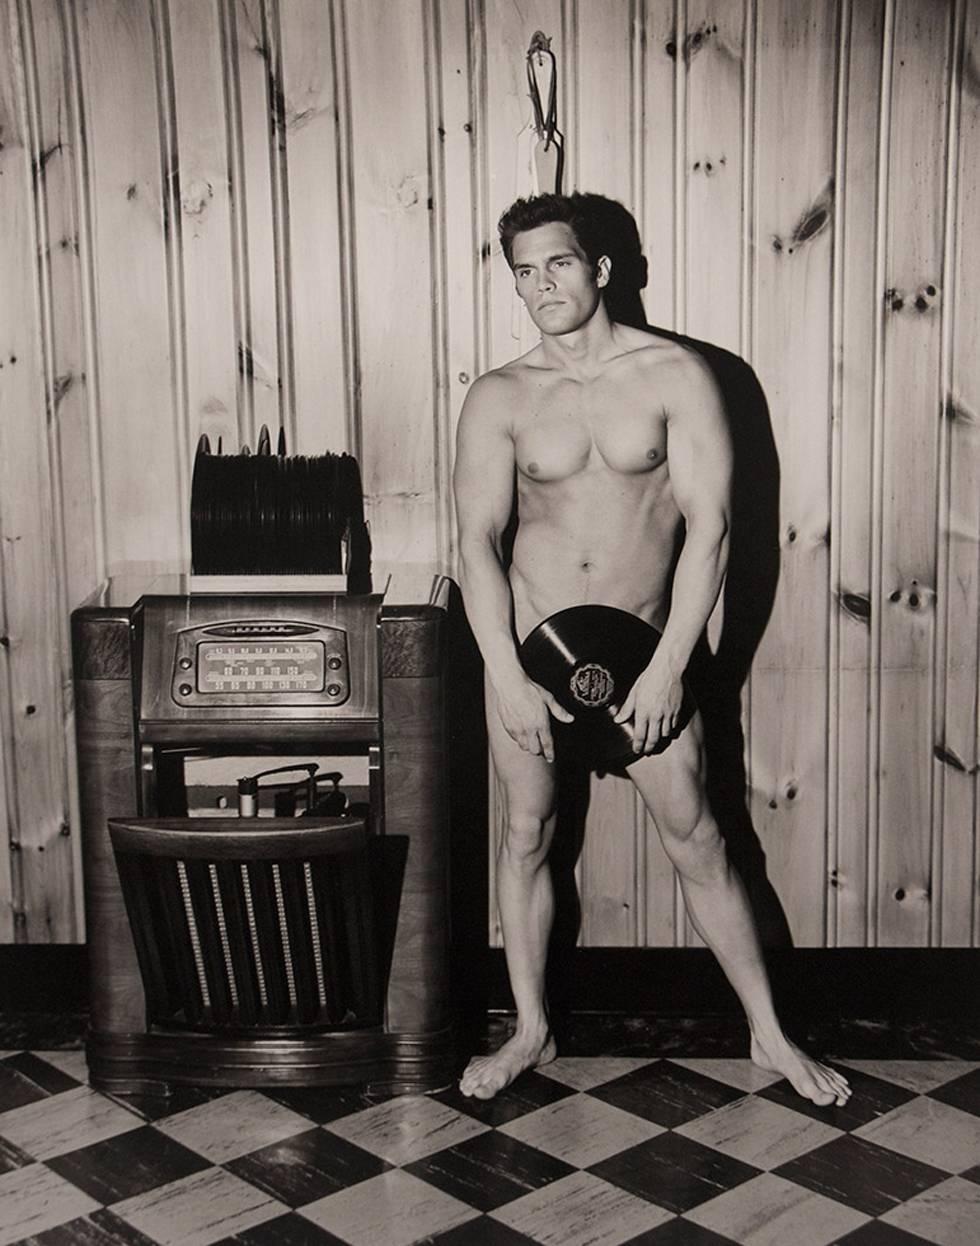 Walter Briski Jr. Nude Photograph - Untitled (Man and Jukebox)